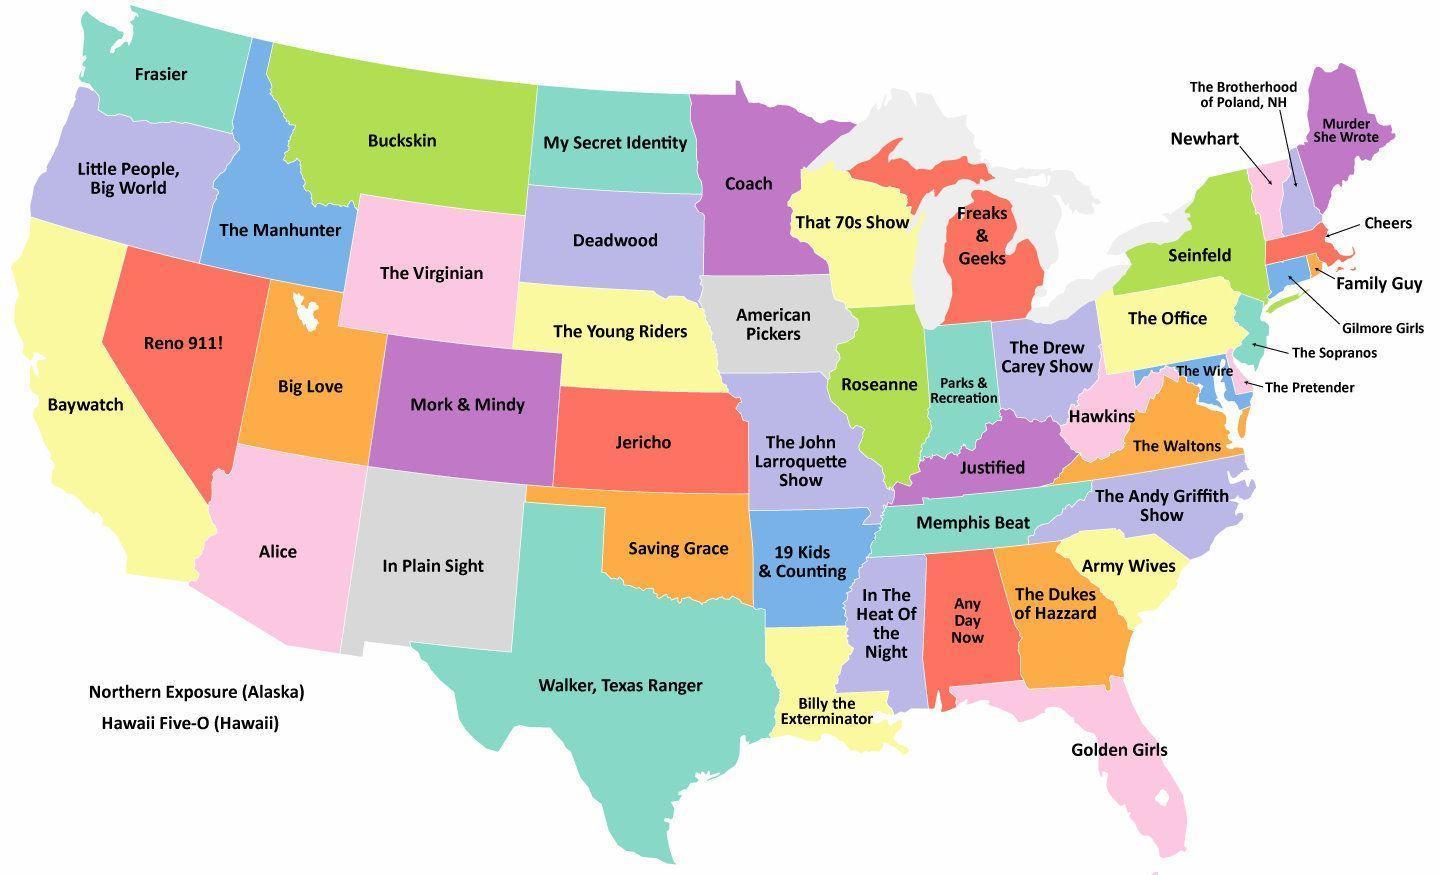 United States Map Desktop Wallpaper